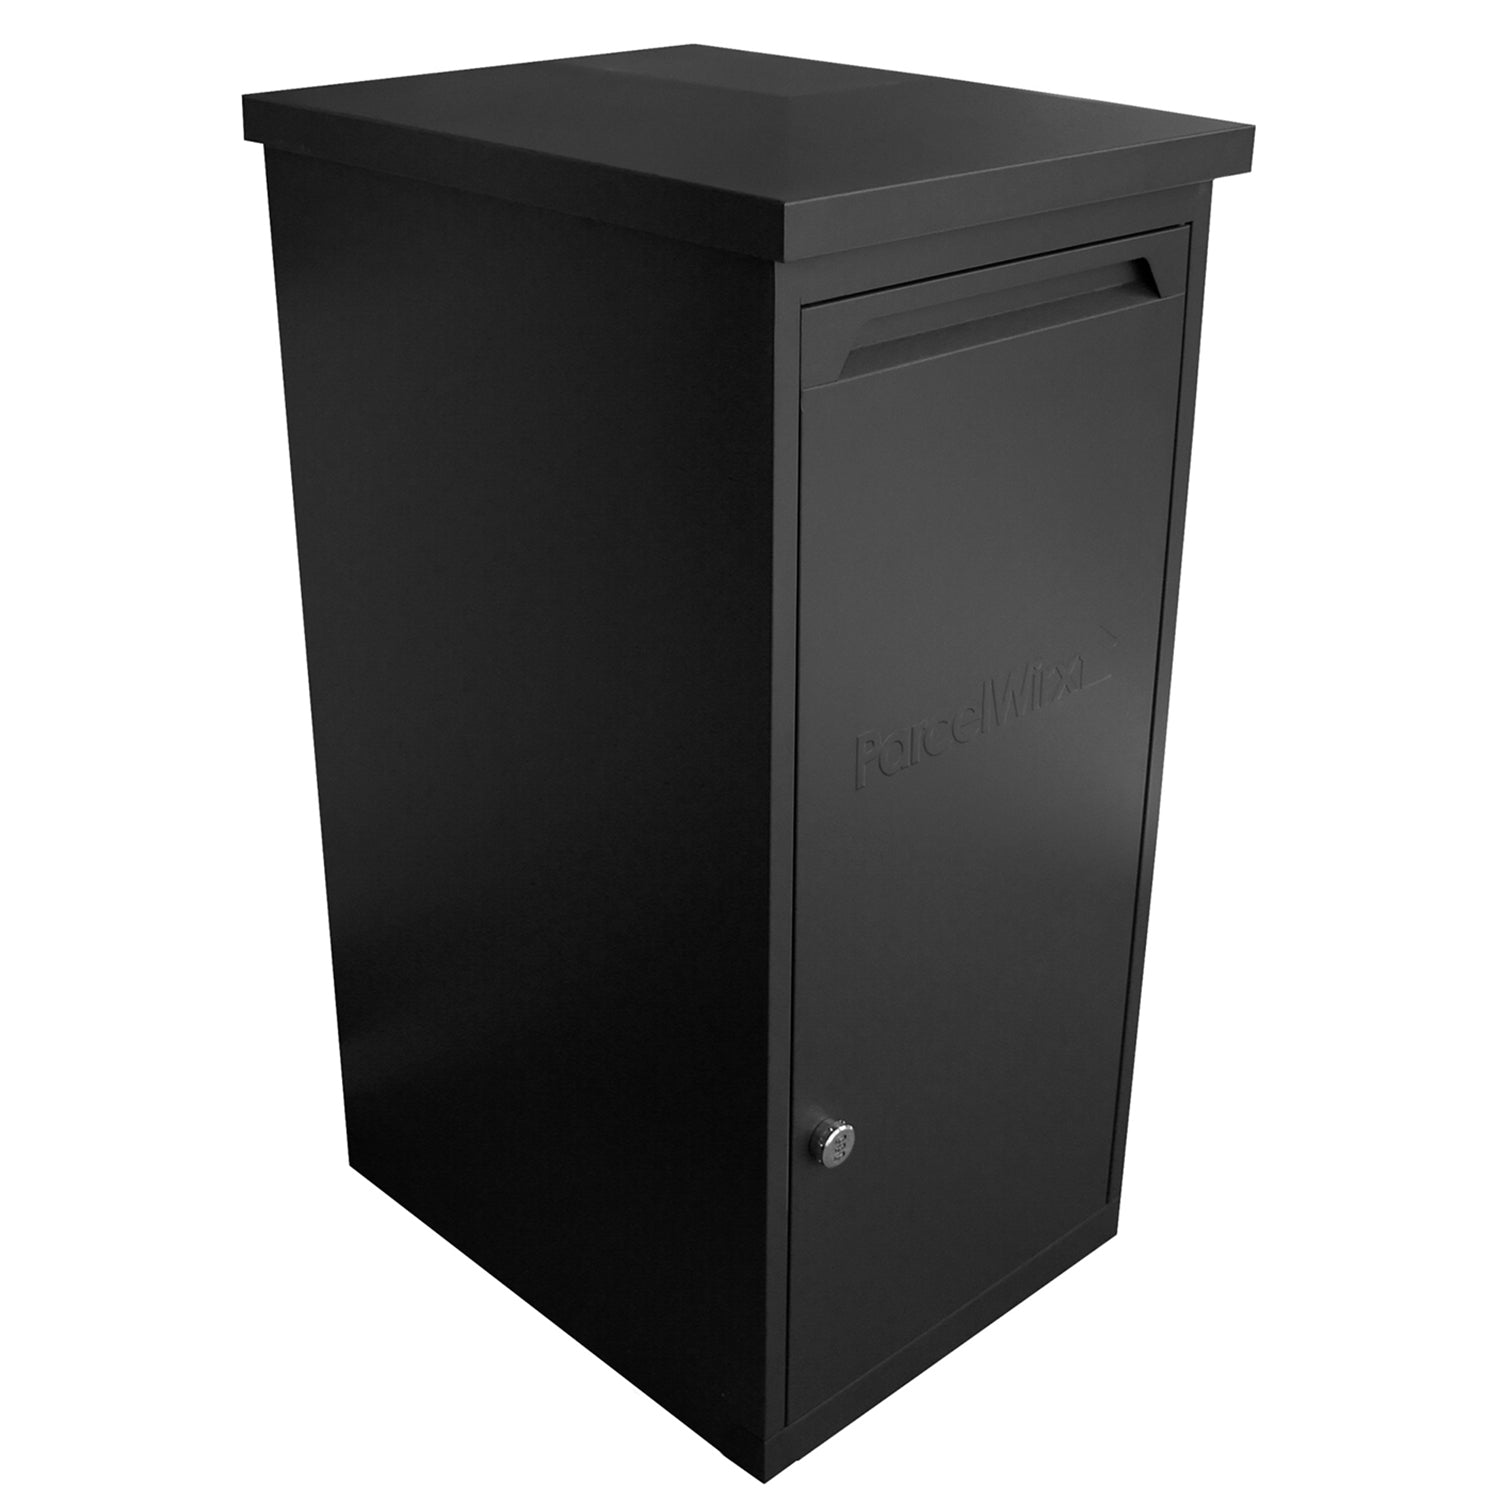 ParcelWirx storage cabinet on a white background